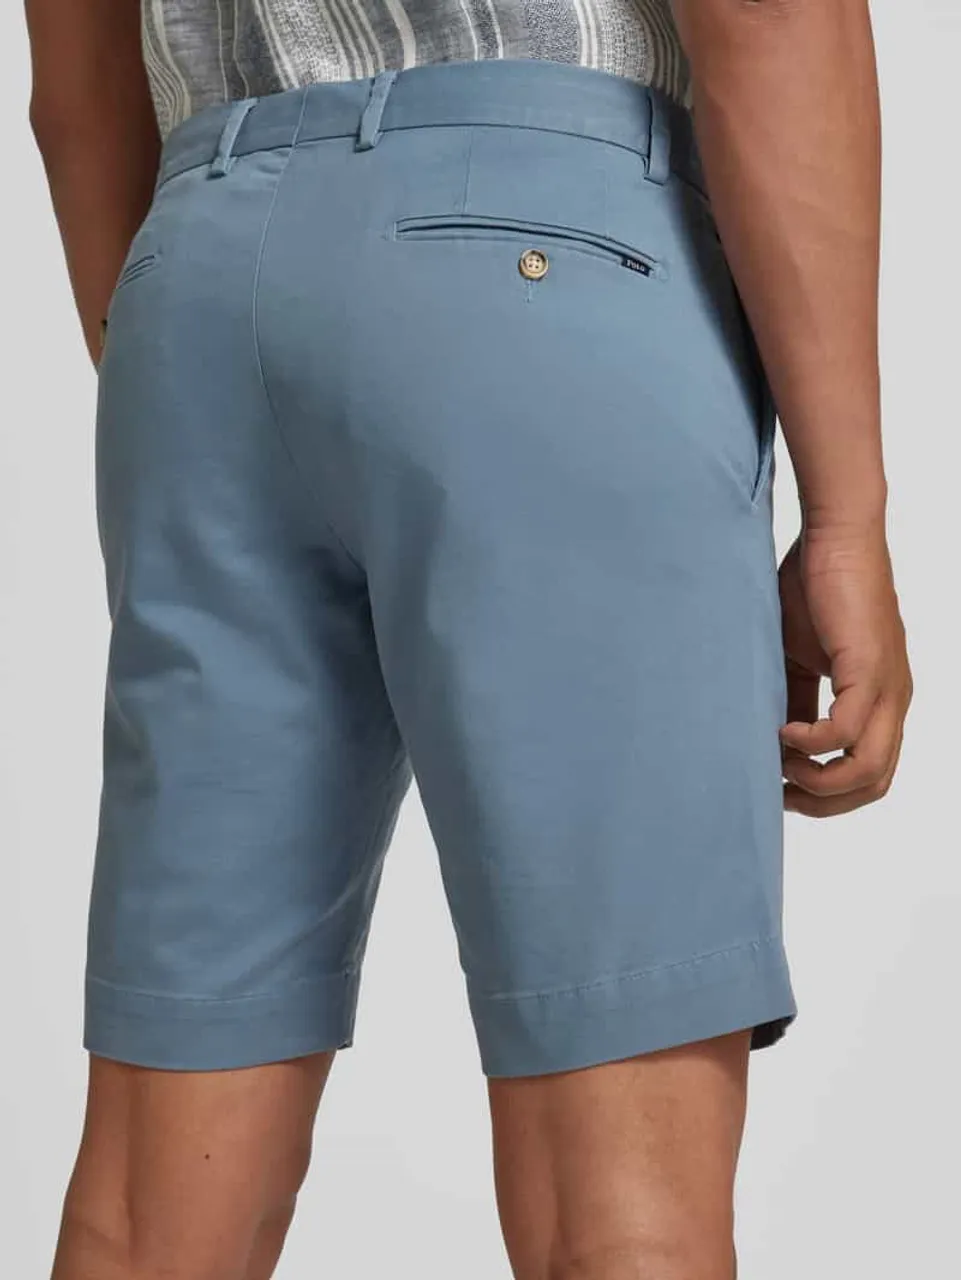 Polo Ralph Lauren Slim Stretch Fit Shorts im unifarbenen Design in Hellblau